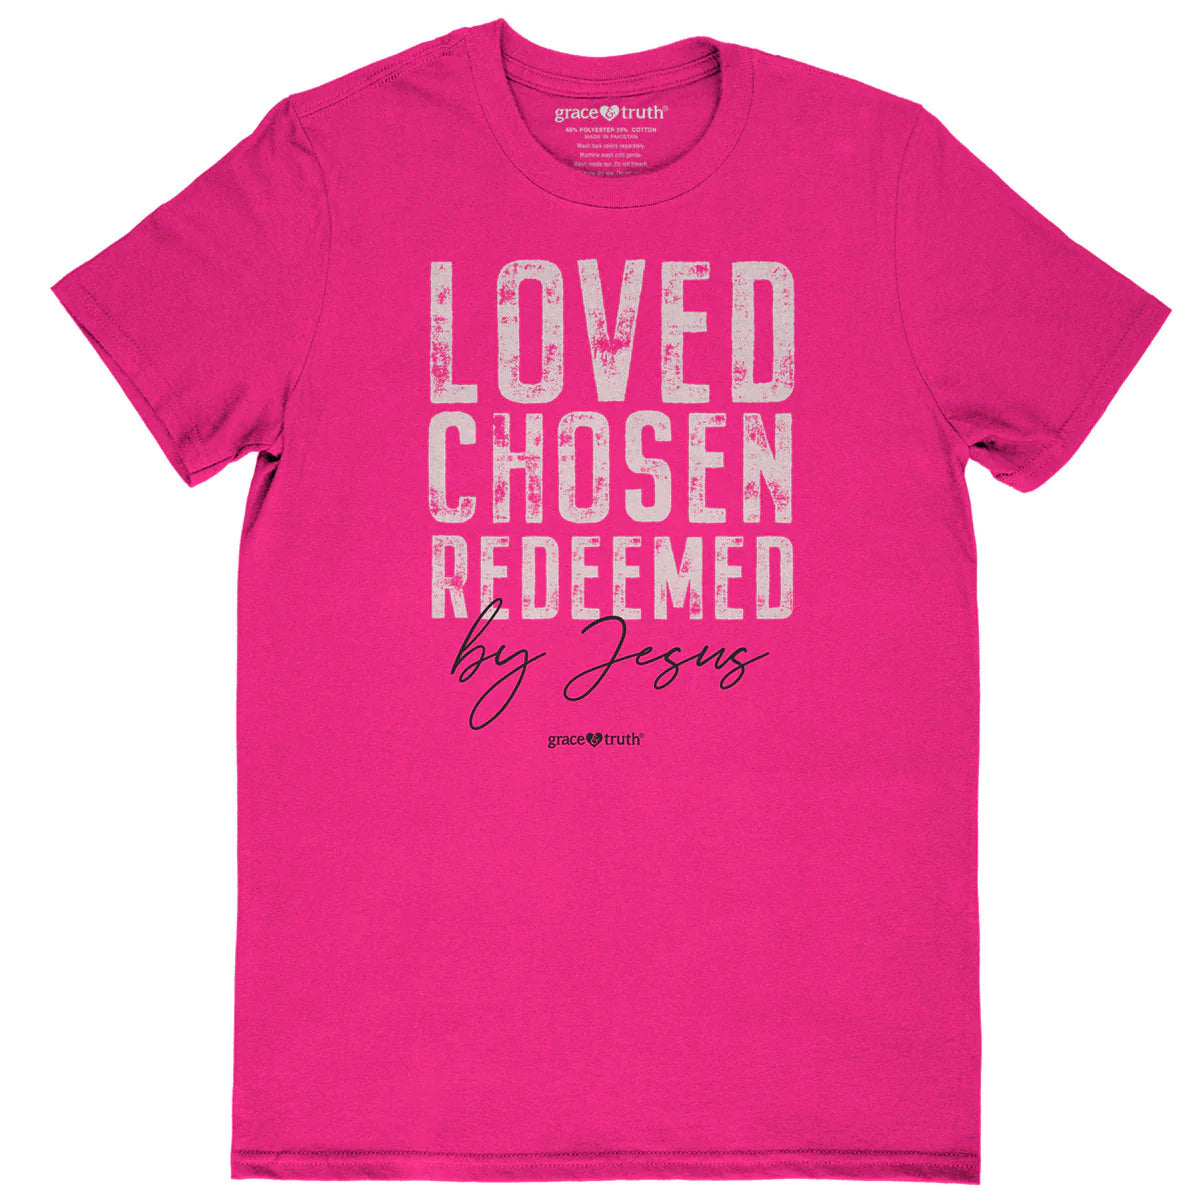 Loved Chosen Redeemed